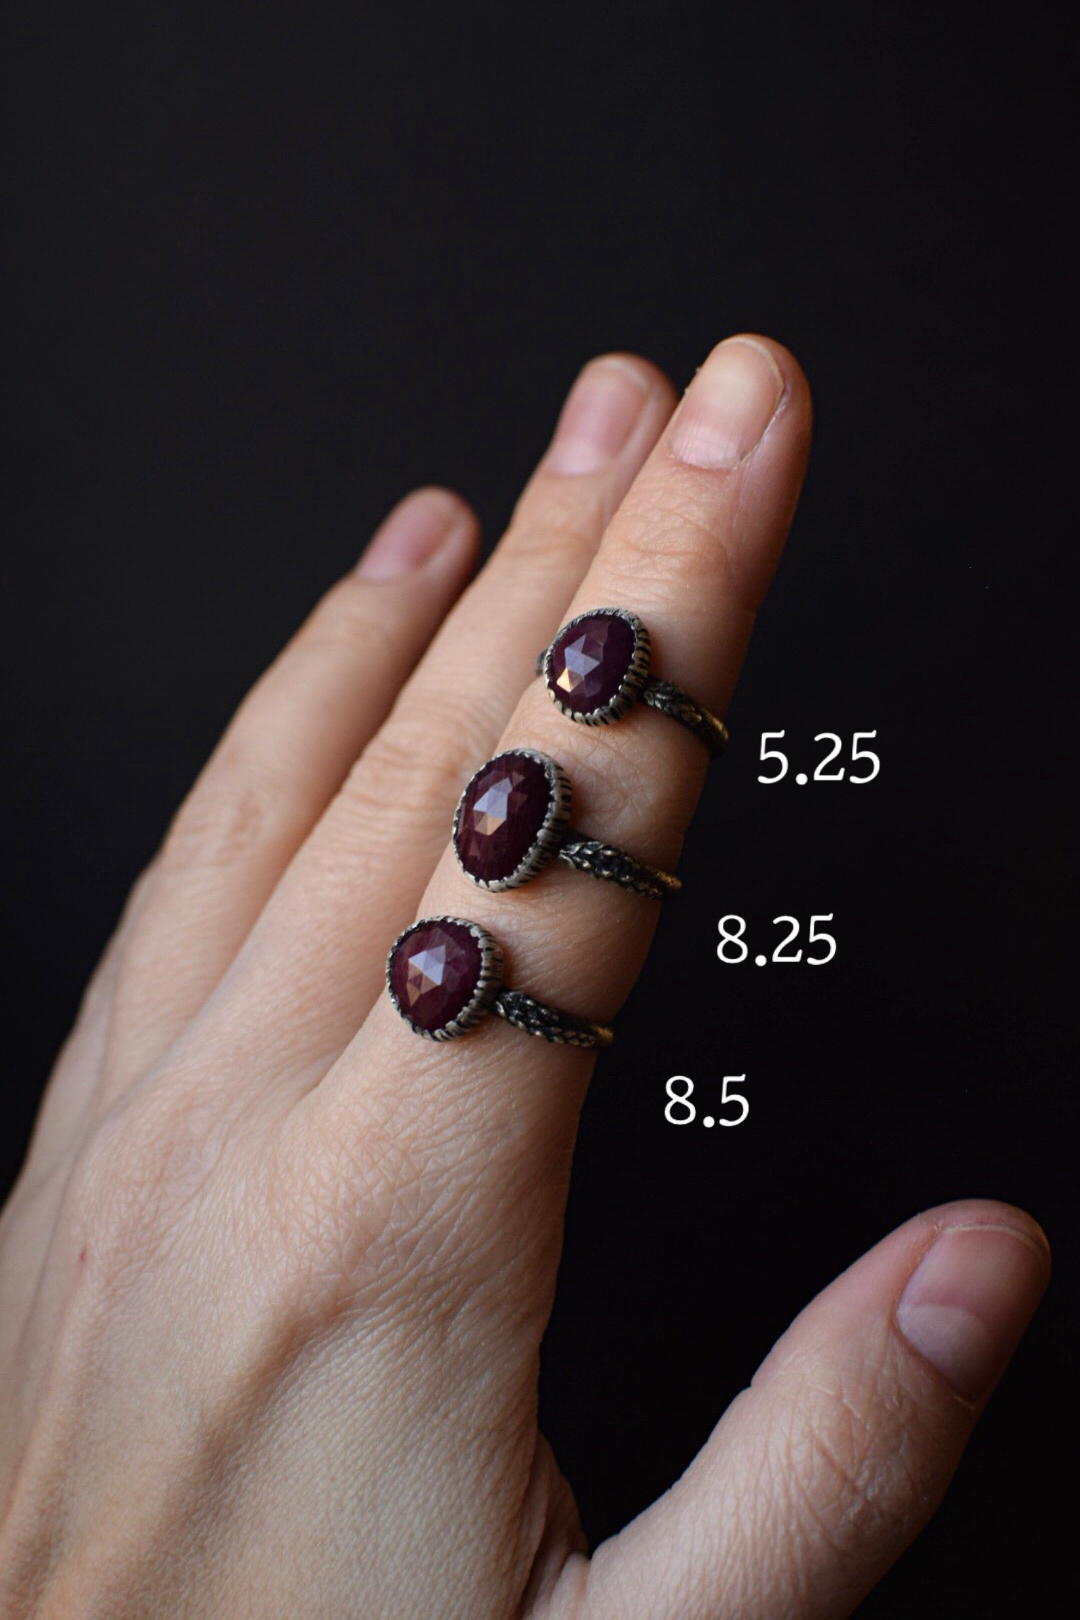 Ruby Fern Rings - Sizes 5.25, 8.25, 8.5